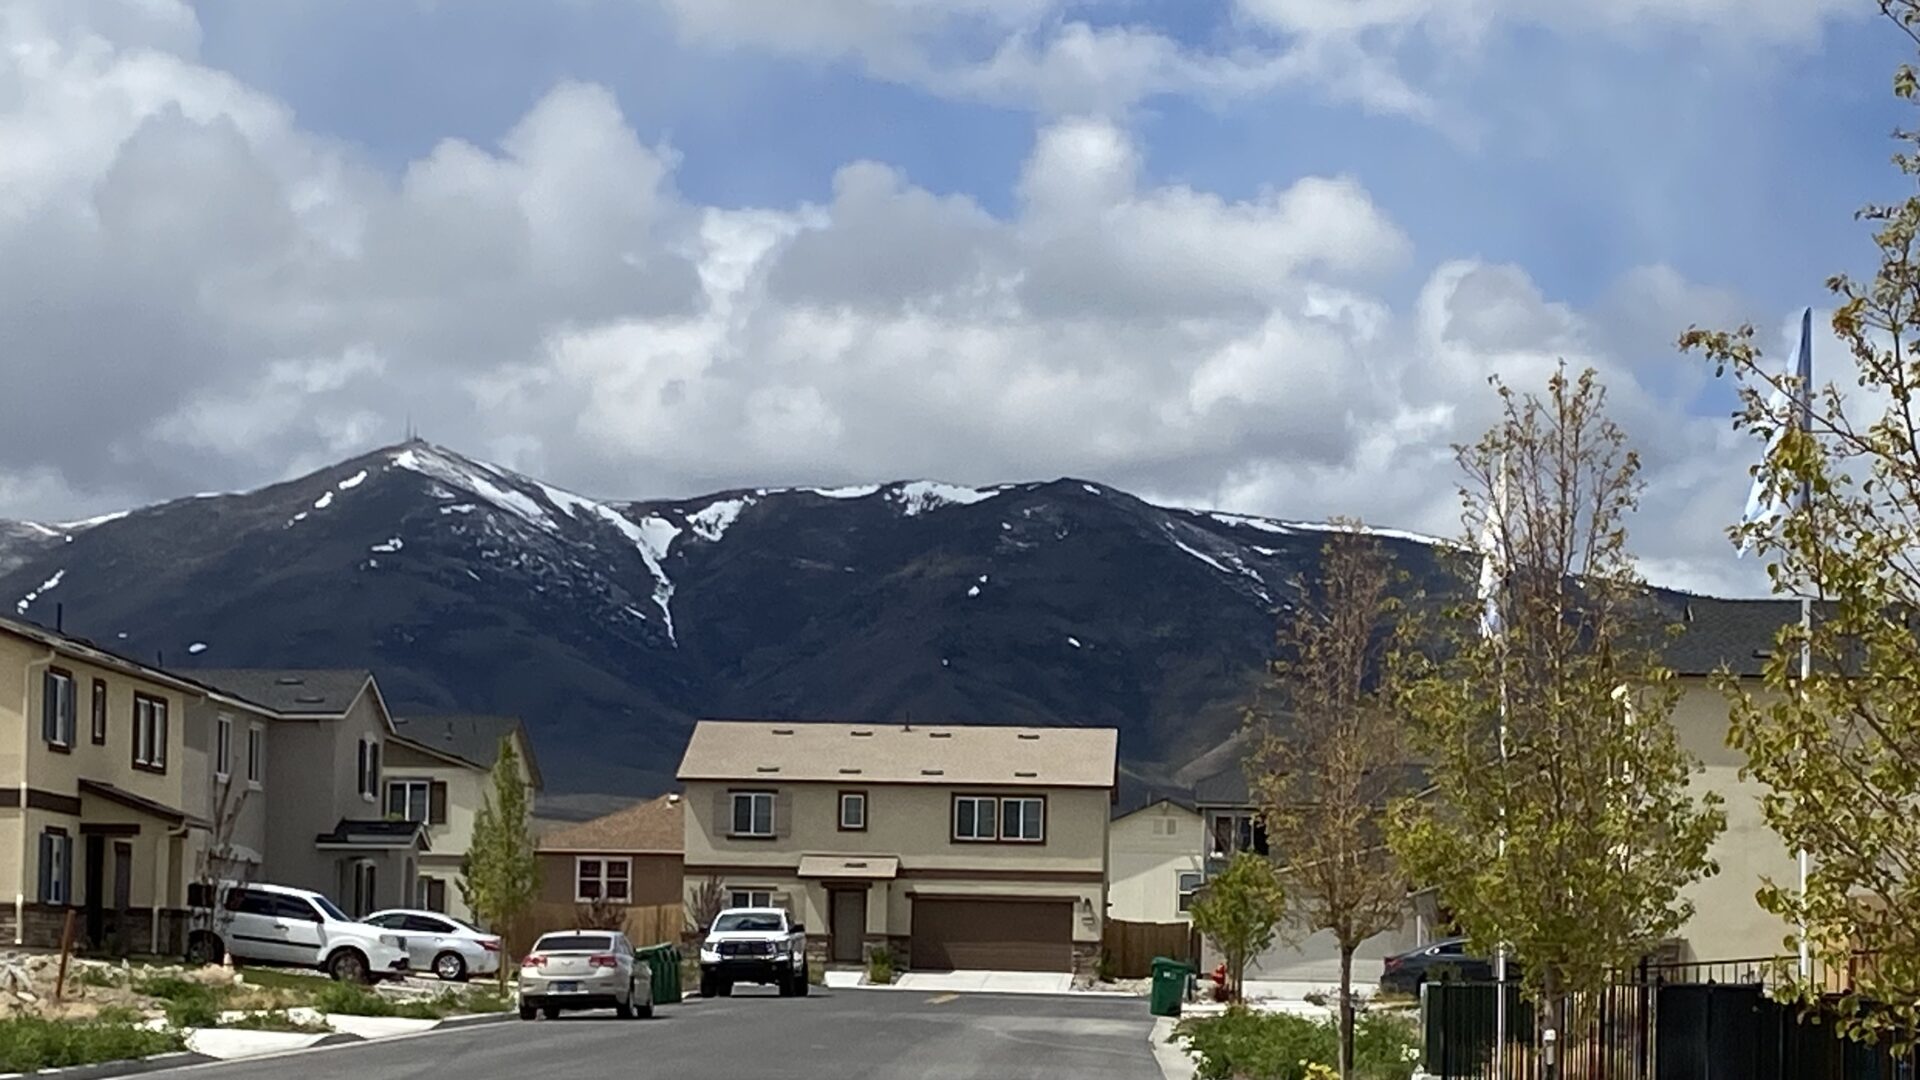 Lennar new homes in Reno